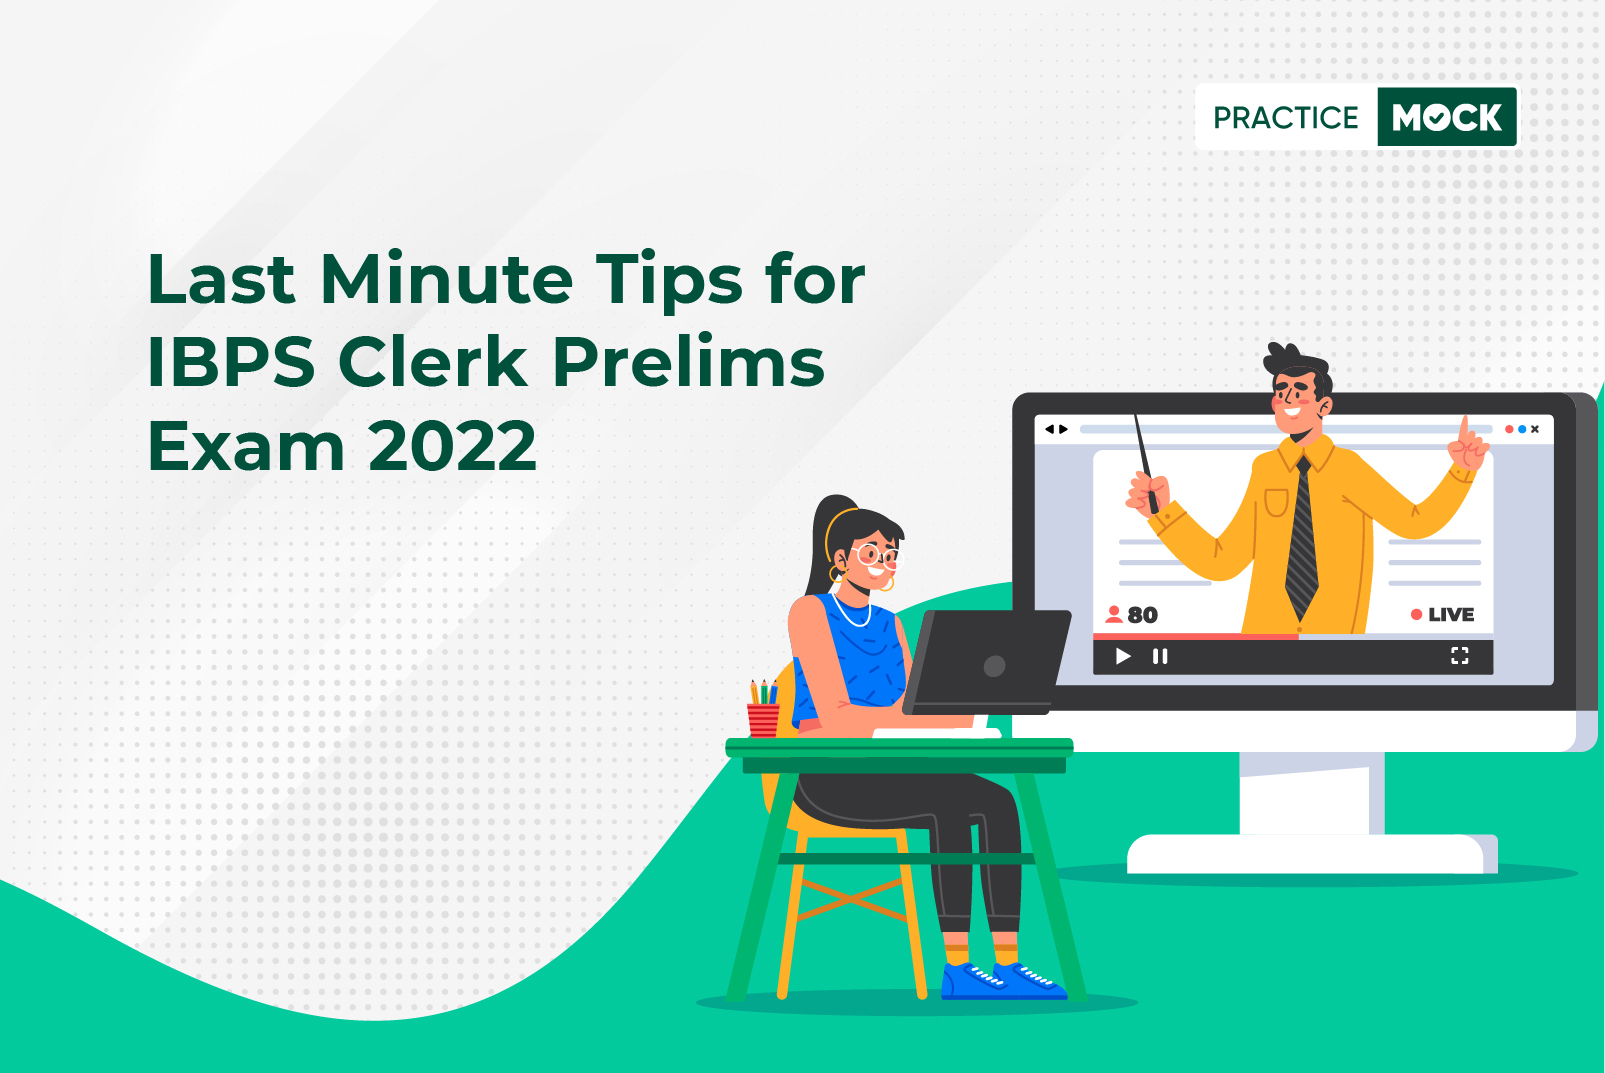 Last minute tips for IBPS Clerk Prelims Exam 2022